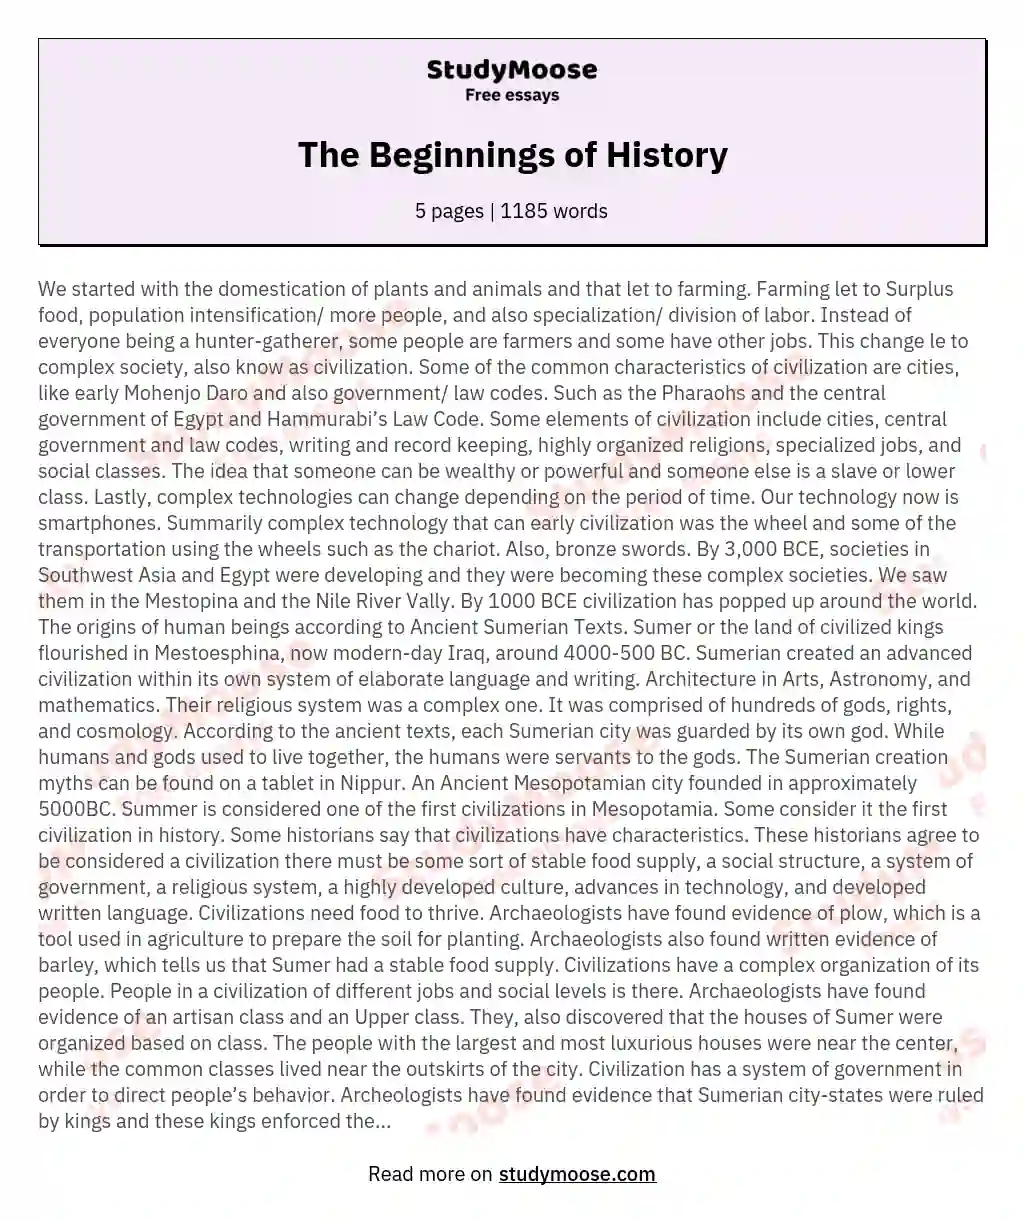 The Beginnings of History essay